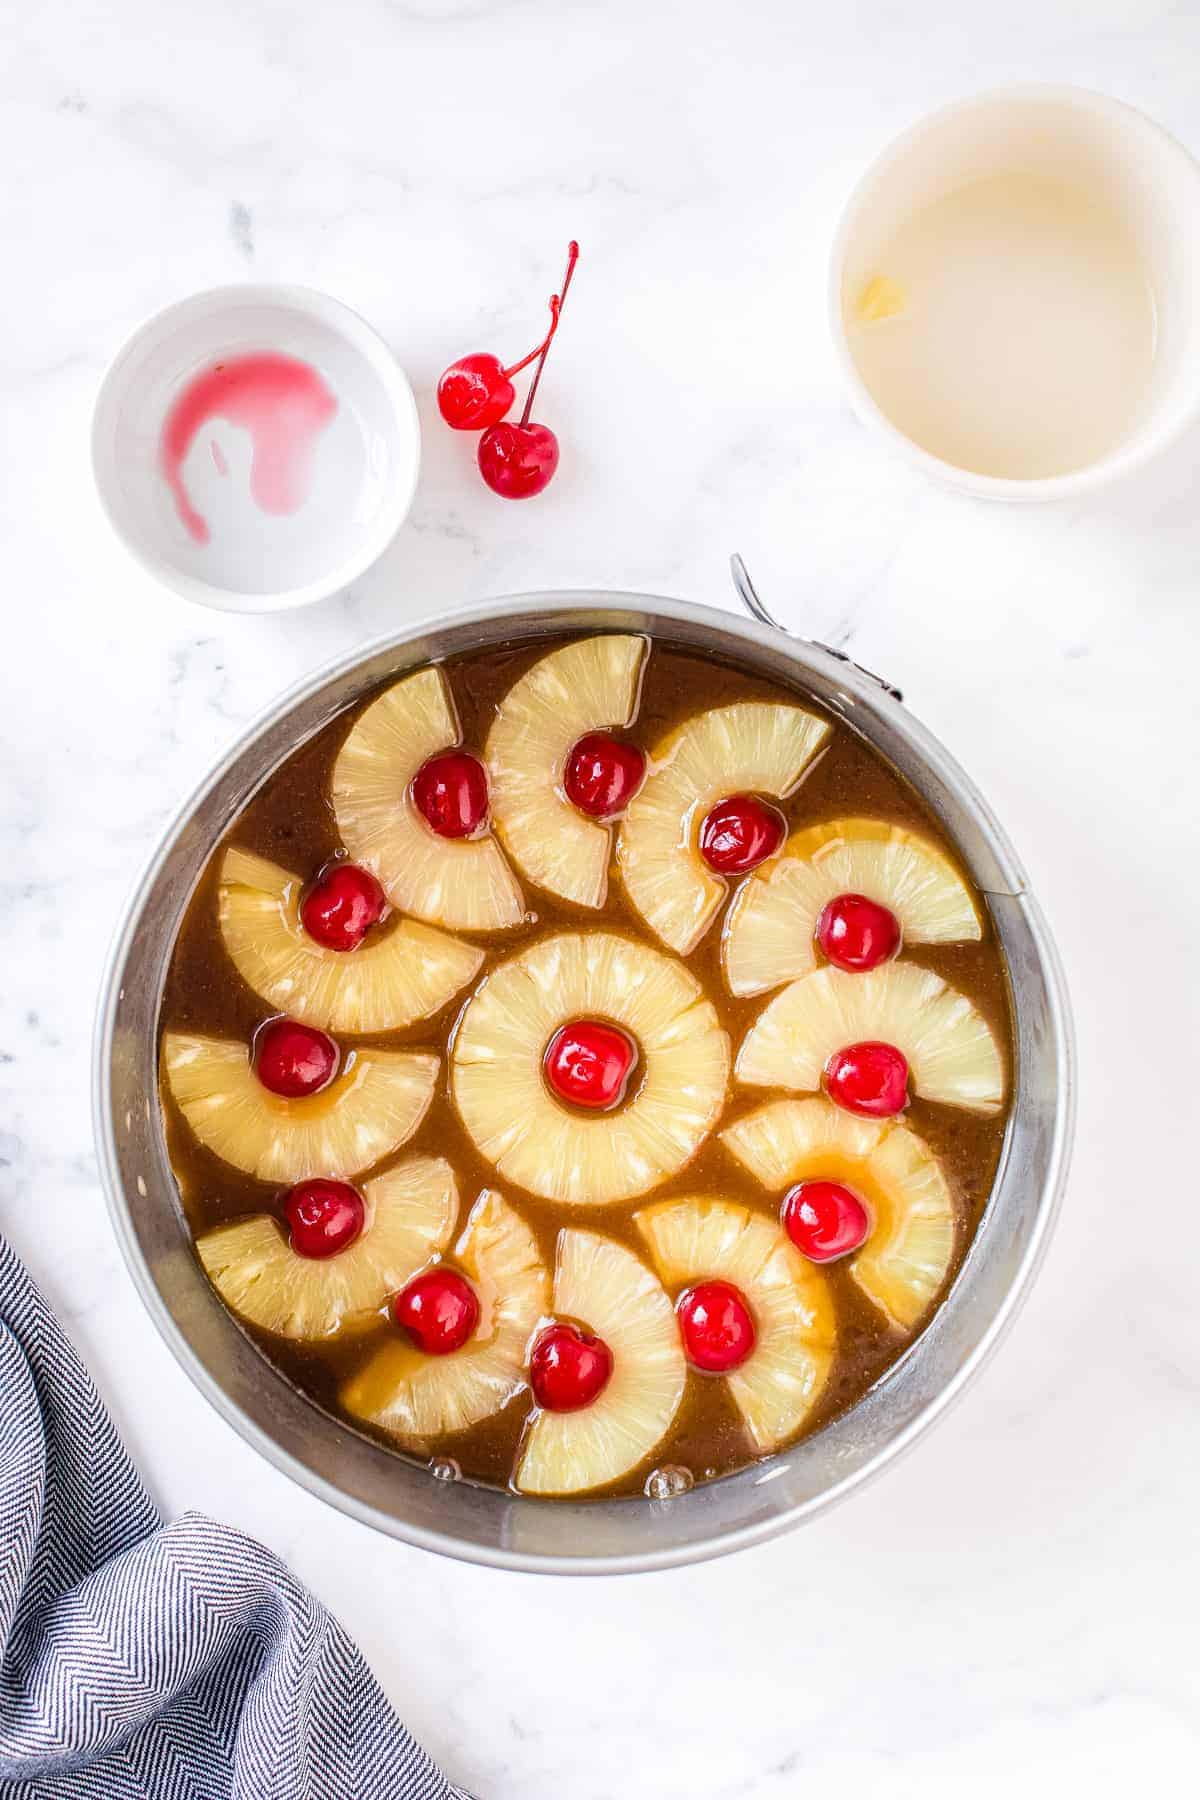 Maraschino cherries and pineapple slices on the bottom of cake pan for cake